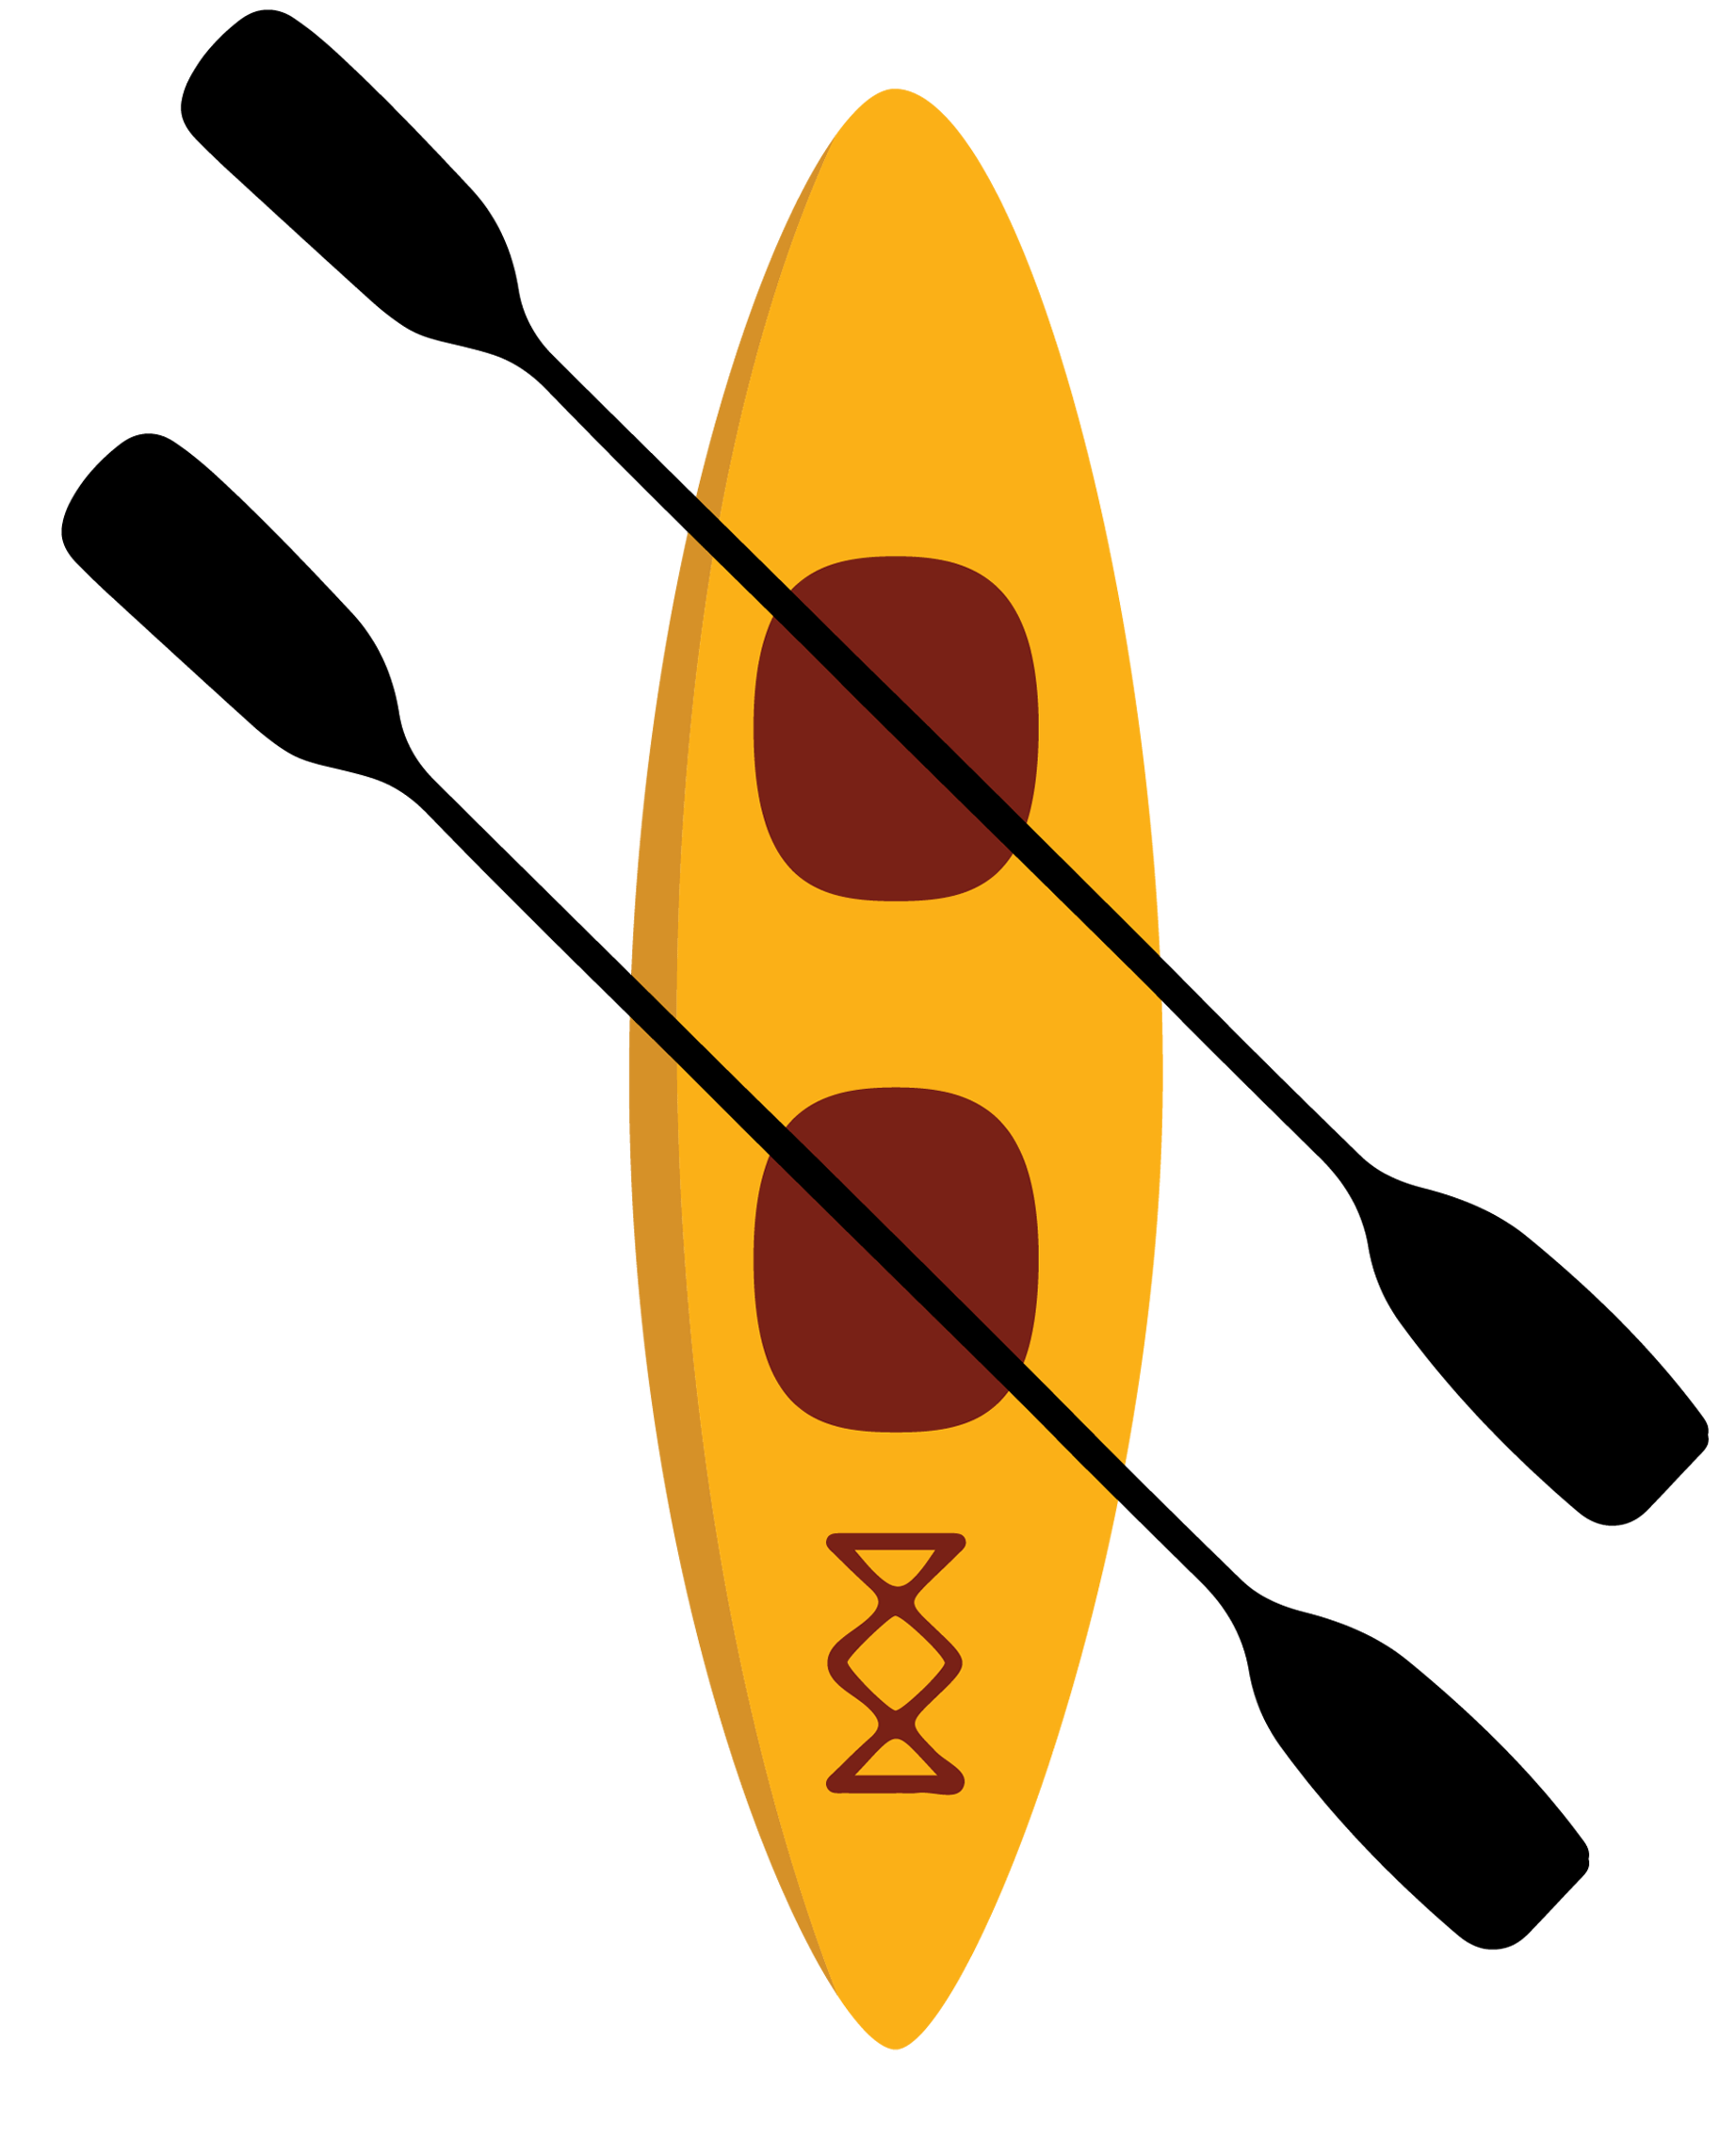 https://austinpedalkayaks.com/wp-content/uploads/2020/06/double-kayak-01.png